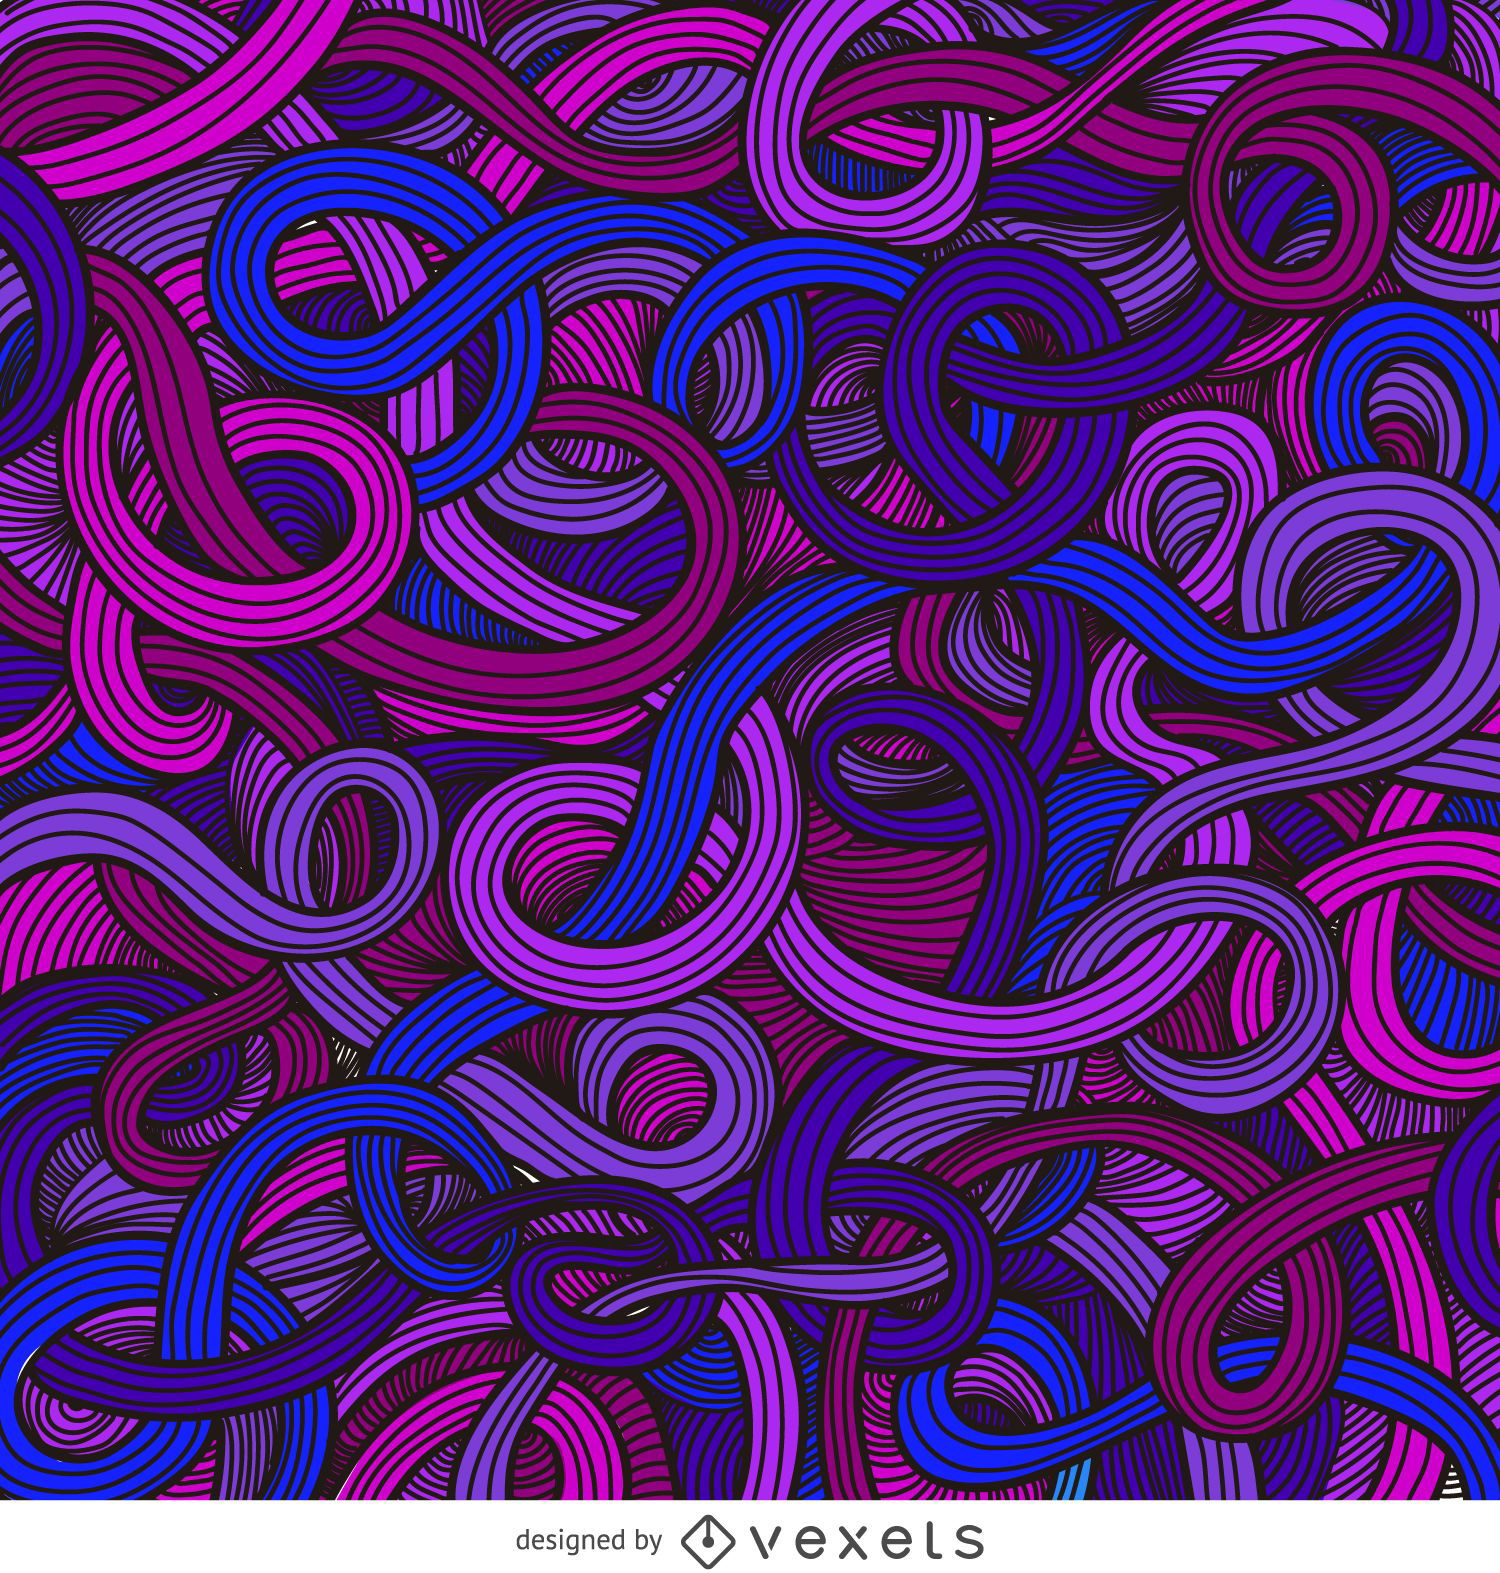 Purple curly swirls background Vector download